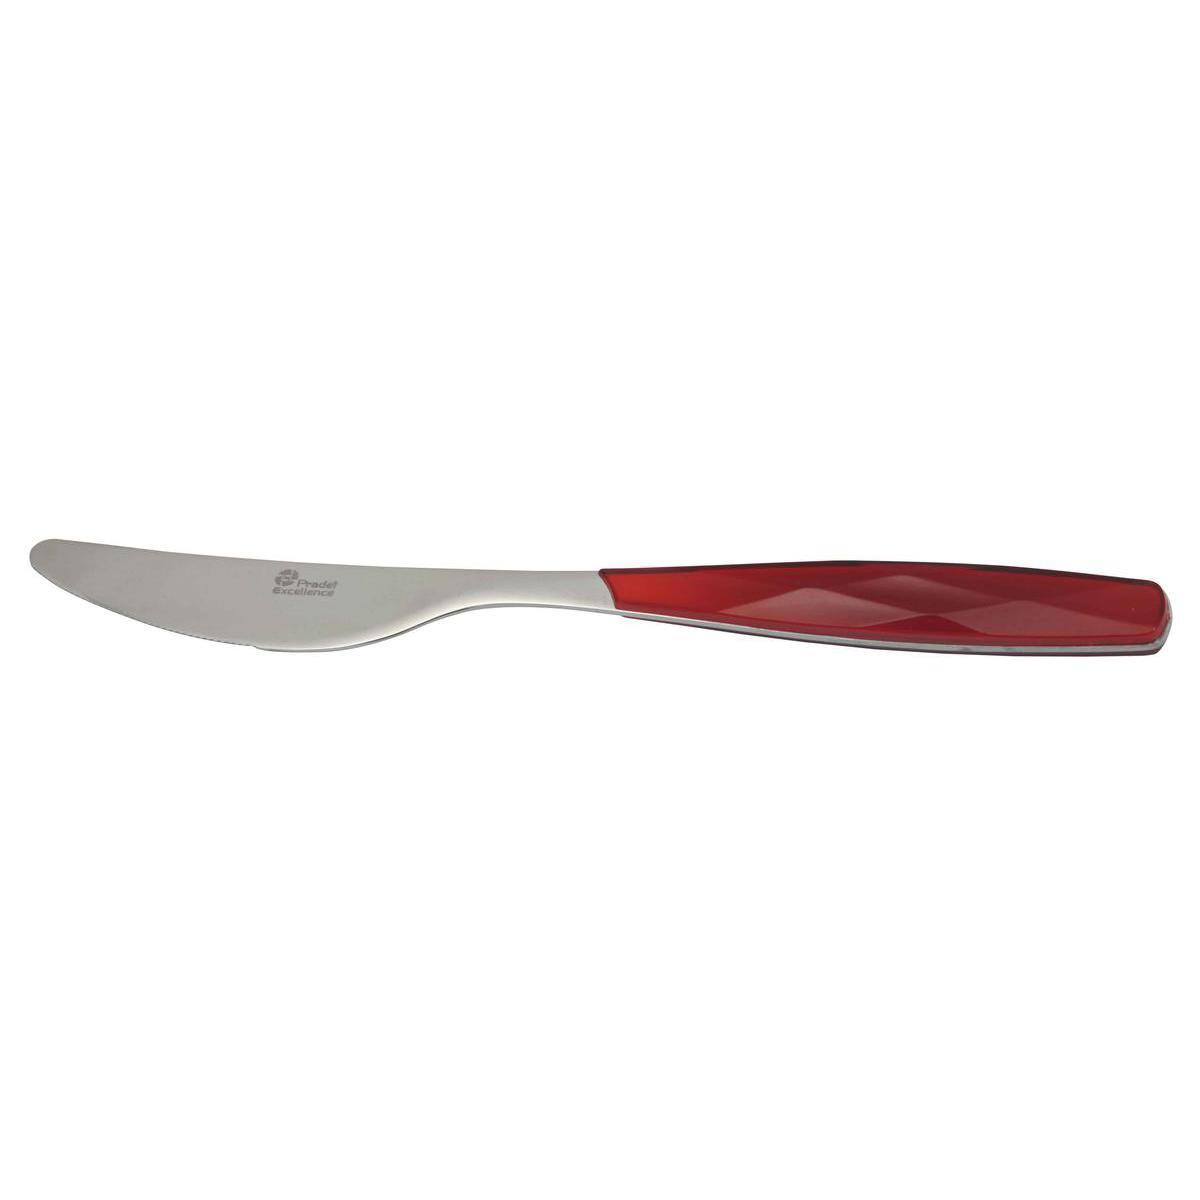 Couteau table excellence - Acier inoxydable - 22,5 cm Rouge